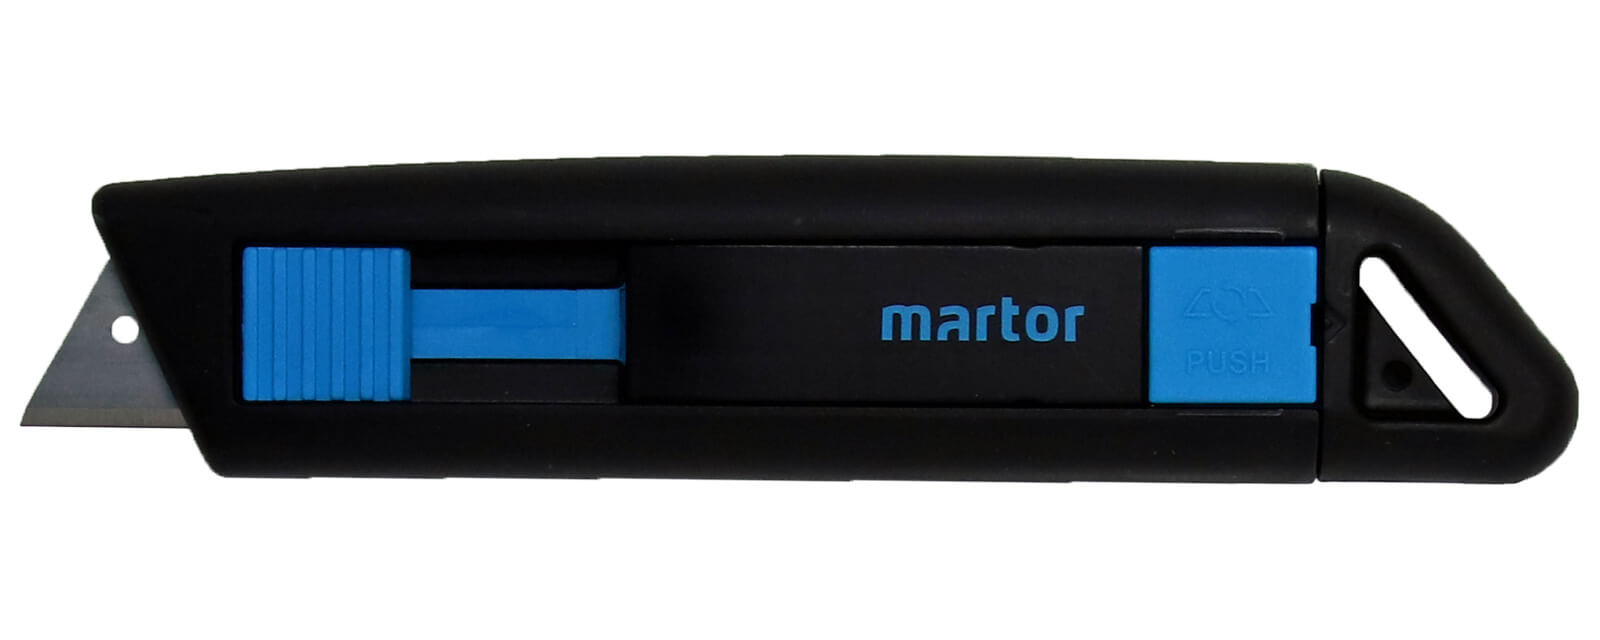 UM123001-martor-Sicherheitsmesser-Secunorm-Profi-light-automatischer-Klingenrückzug-CURT-tools_1600